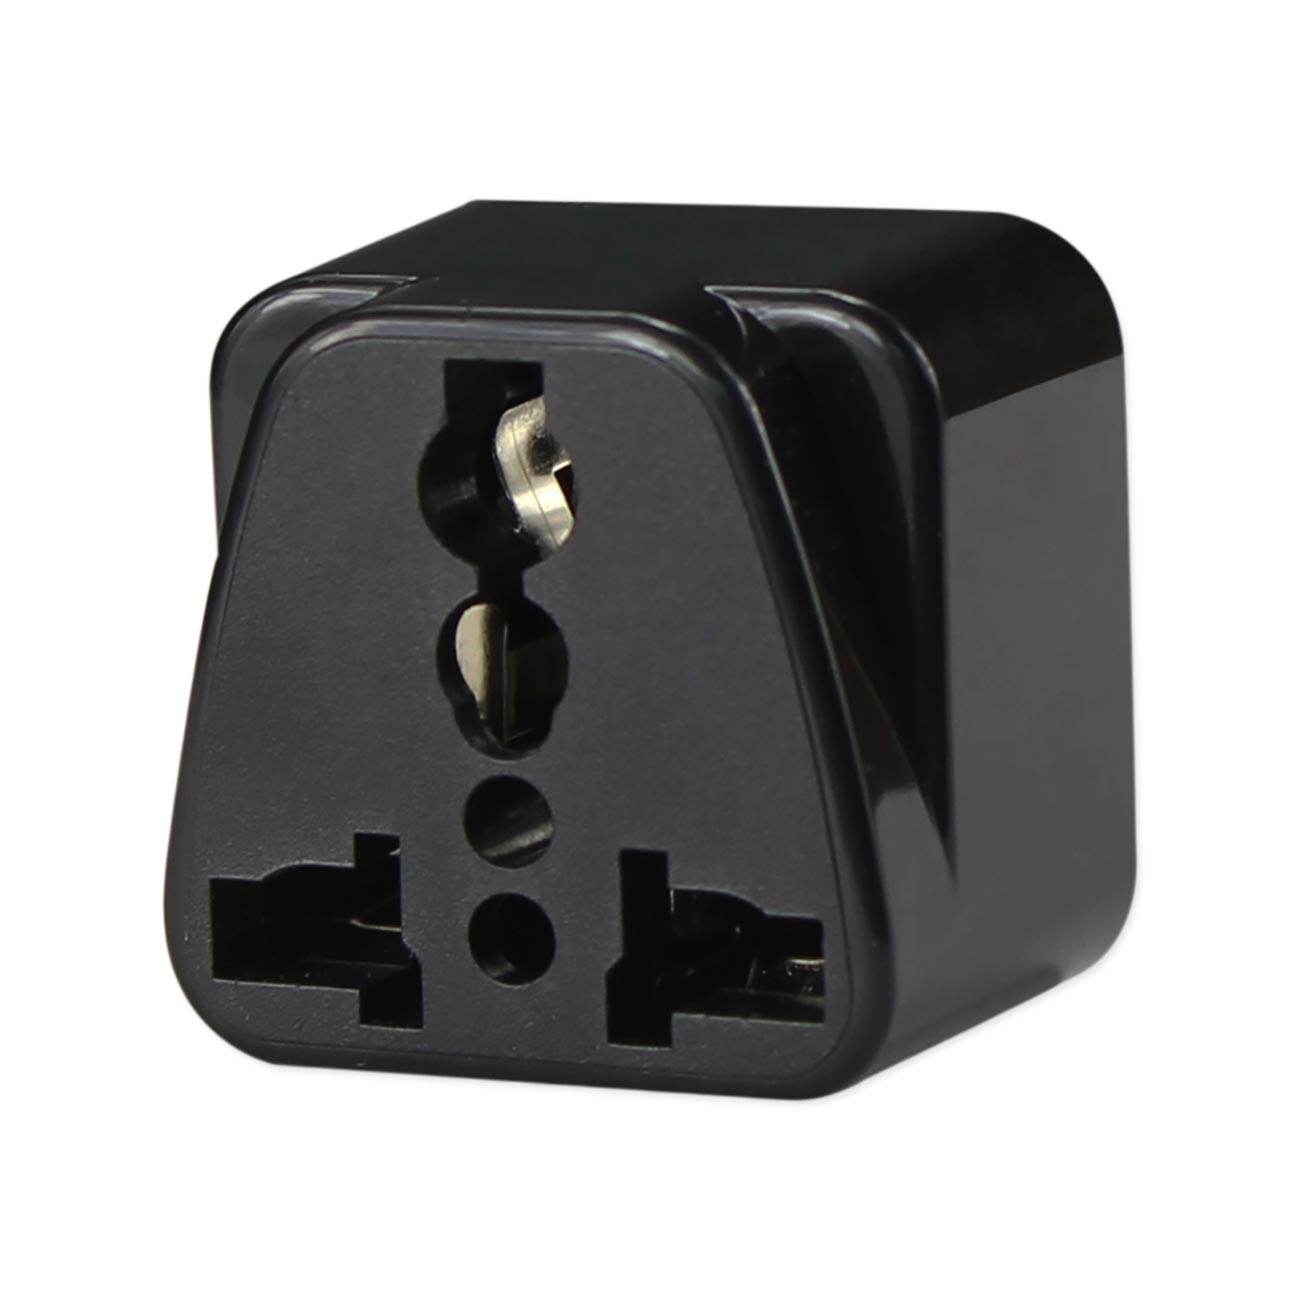 Universal Europe Eu / Uk / Au To Us Travel Plug Power Adapter Converter In Black